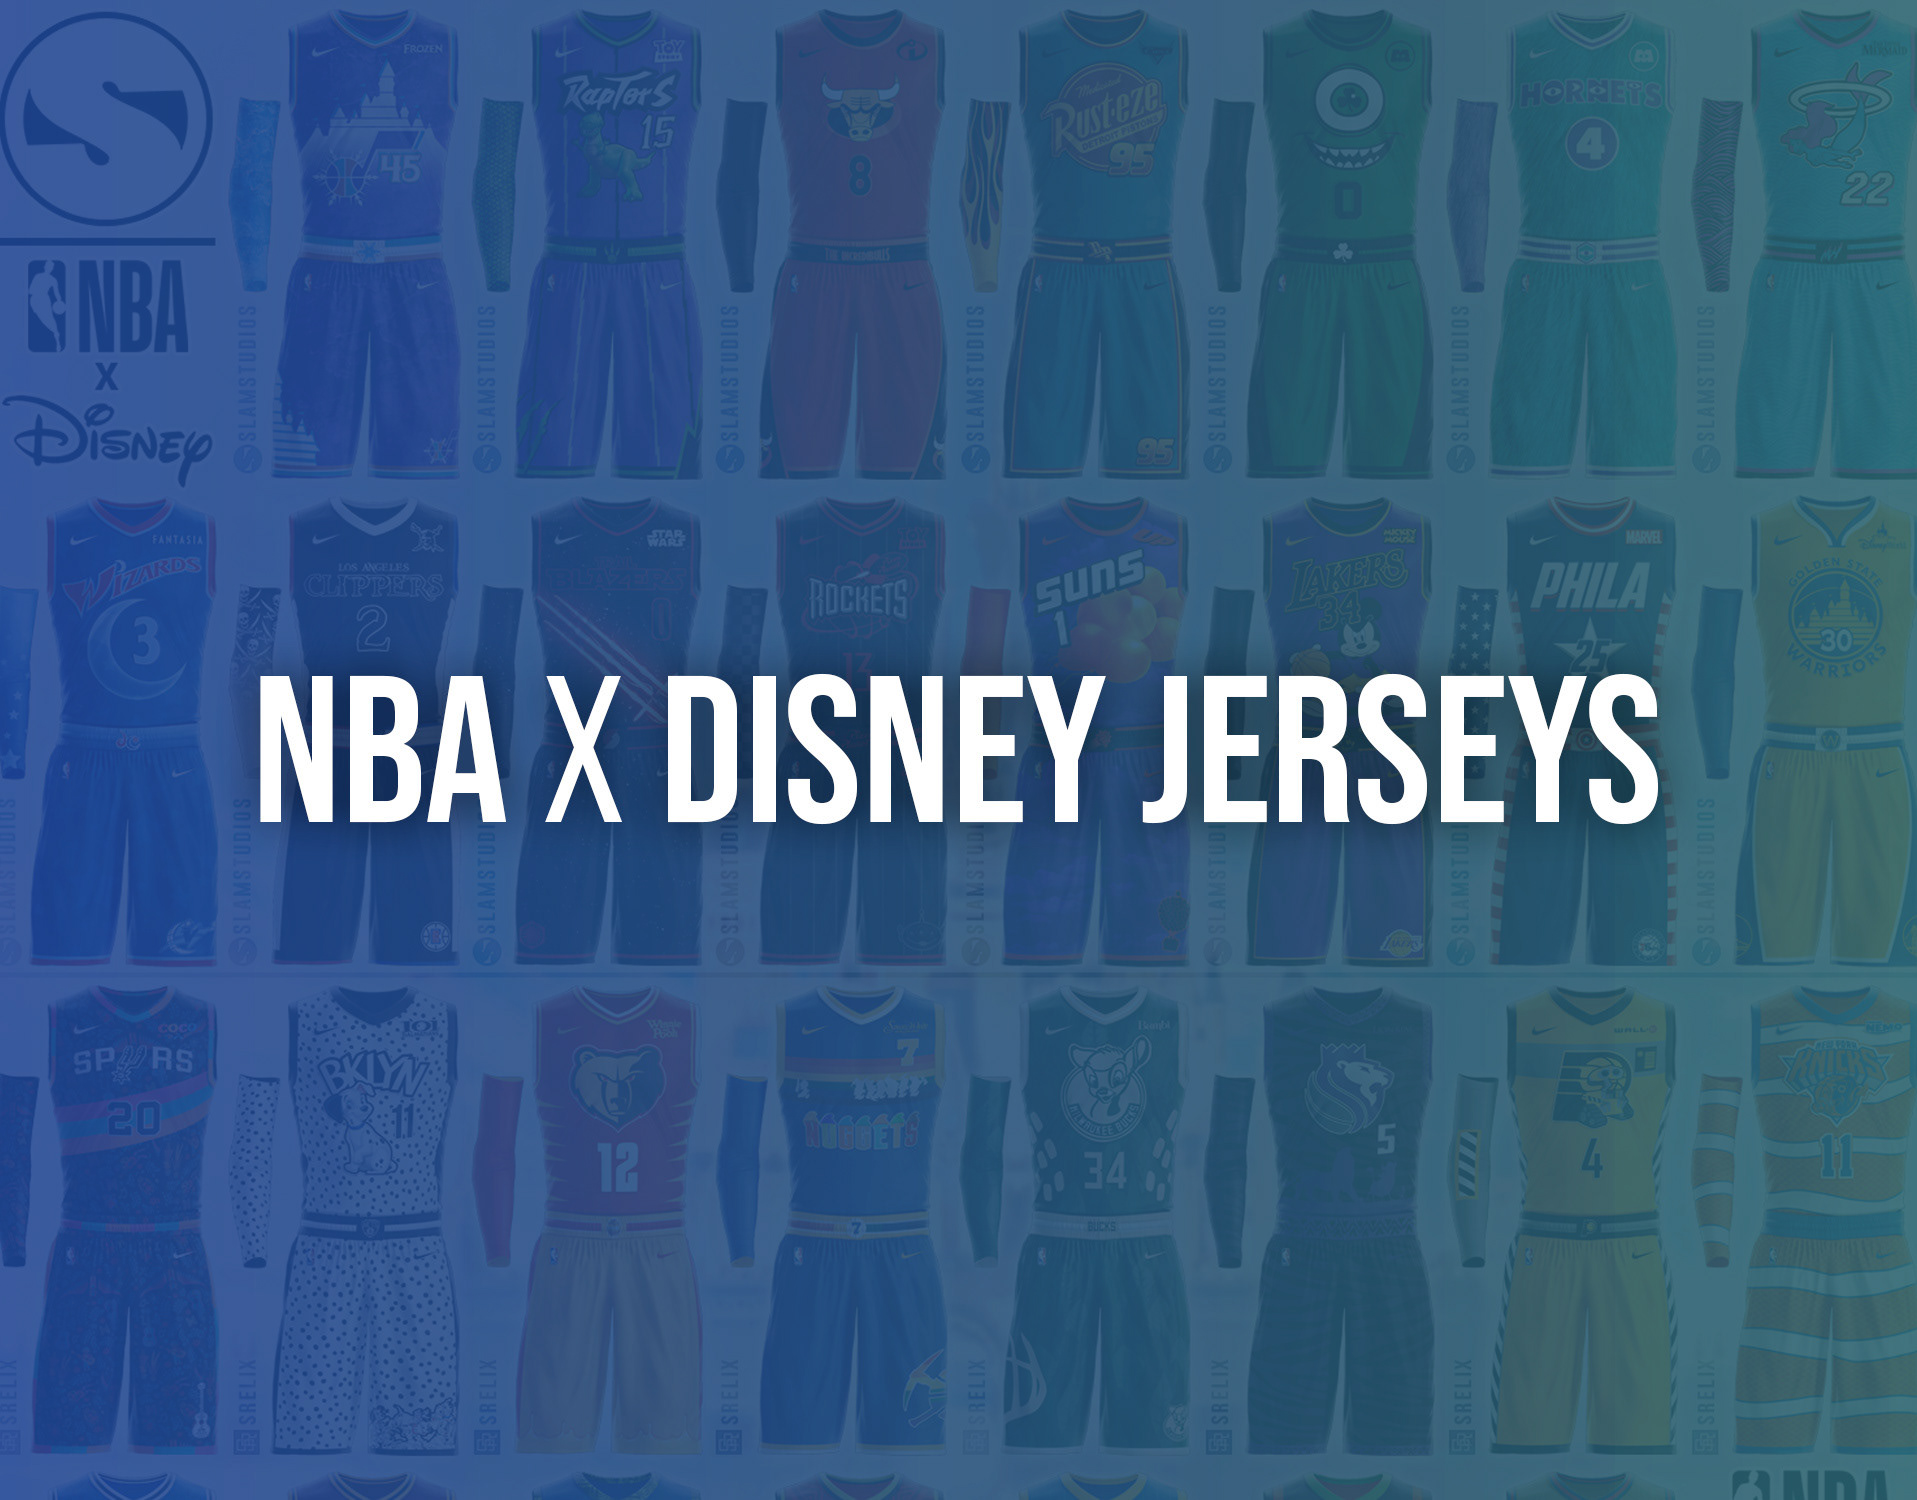 SRELIX Portfolio - NBA Christmas 2019 Jersey Concepts